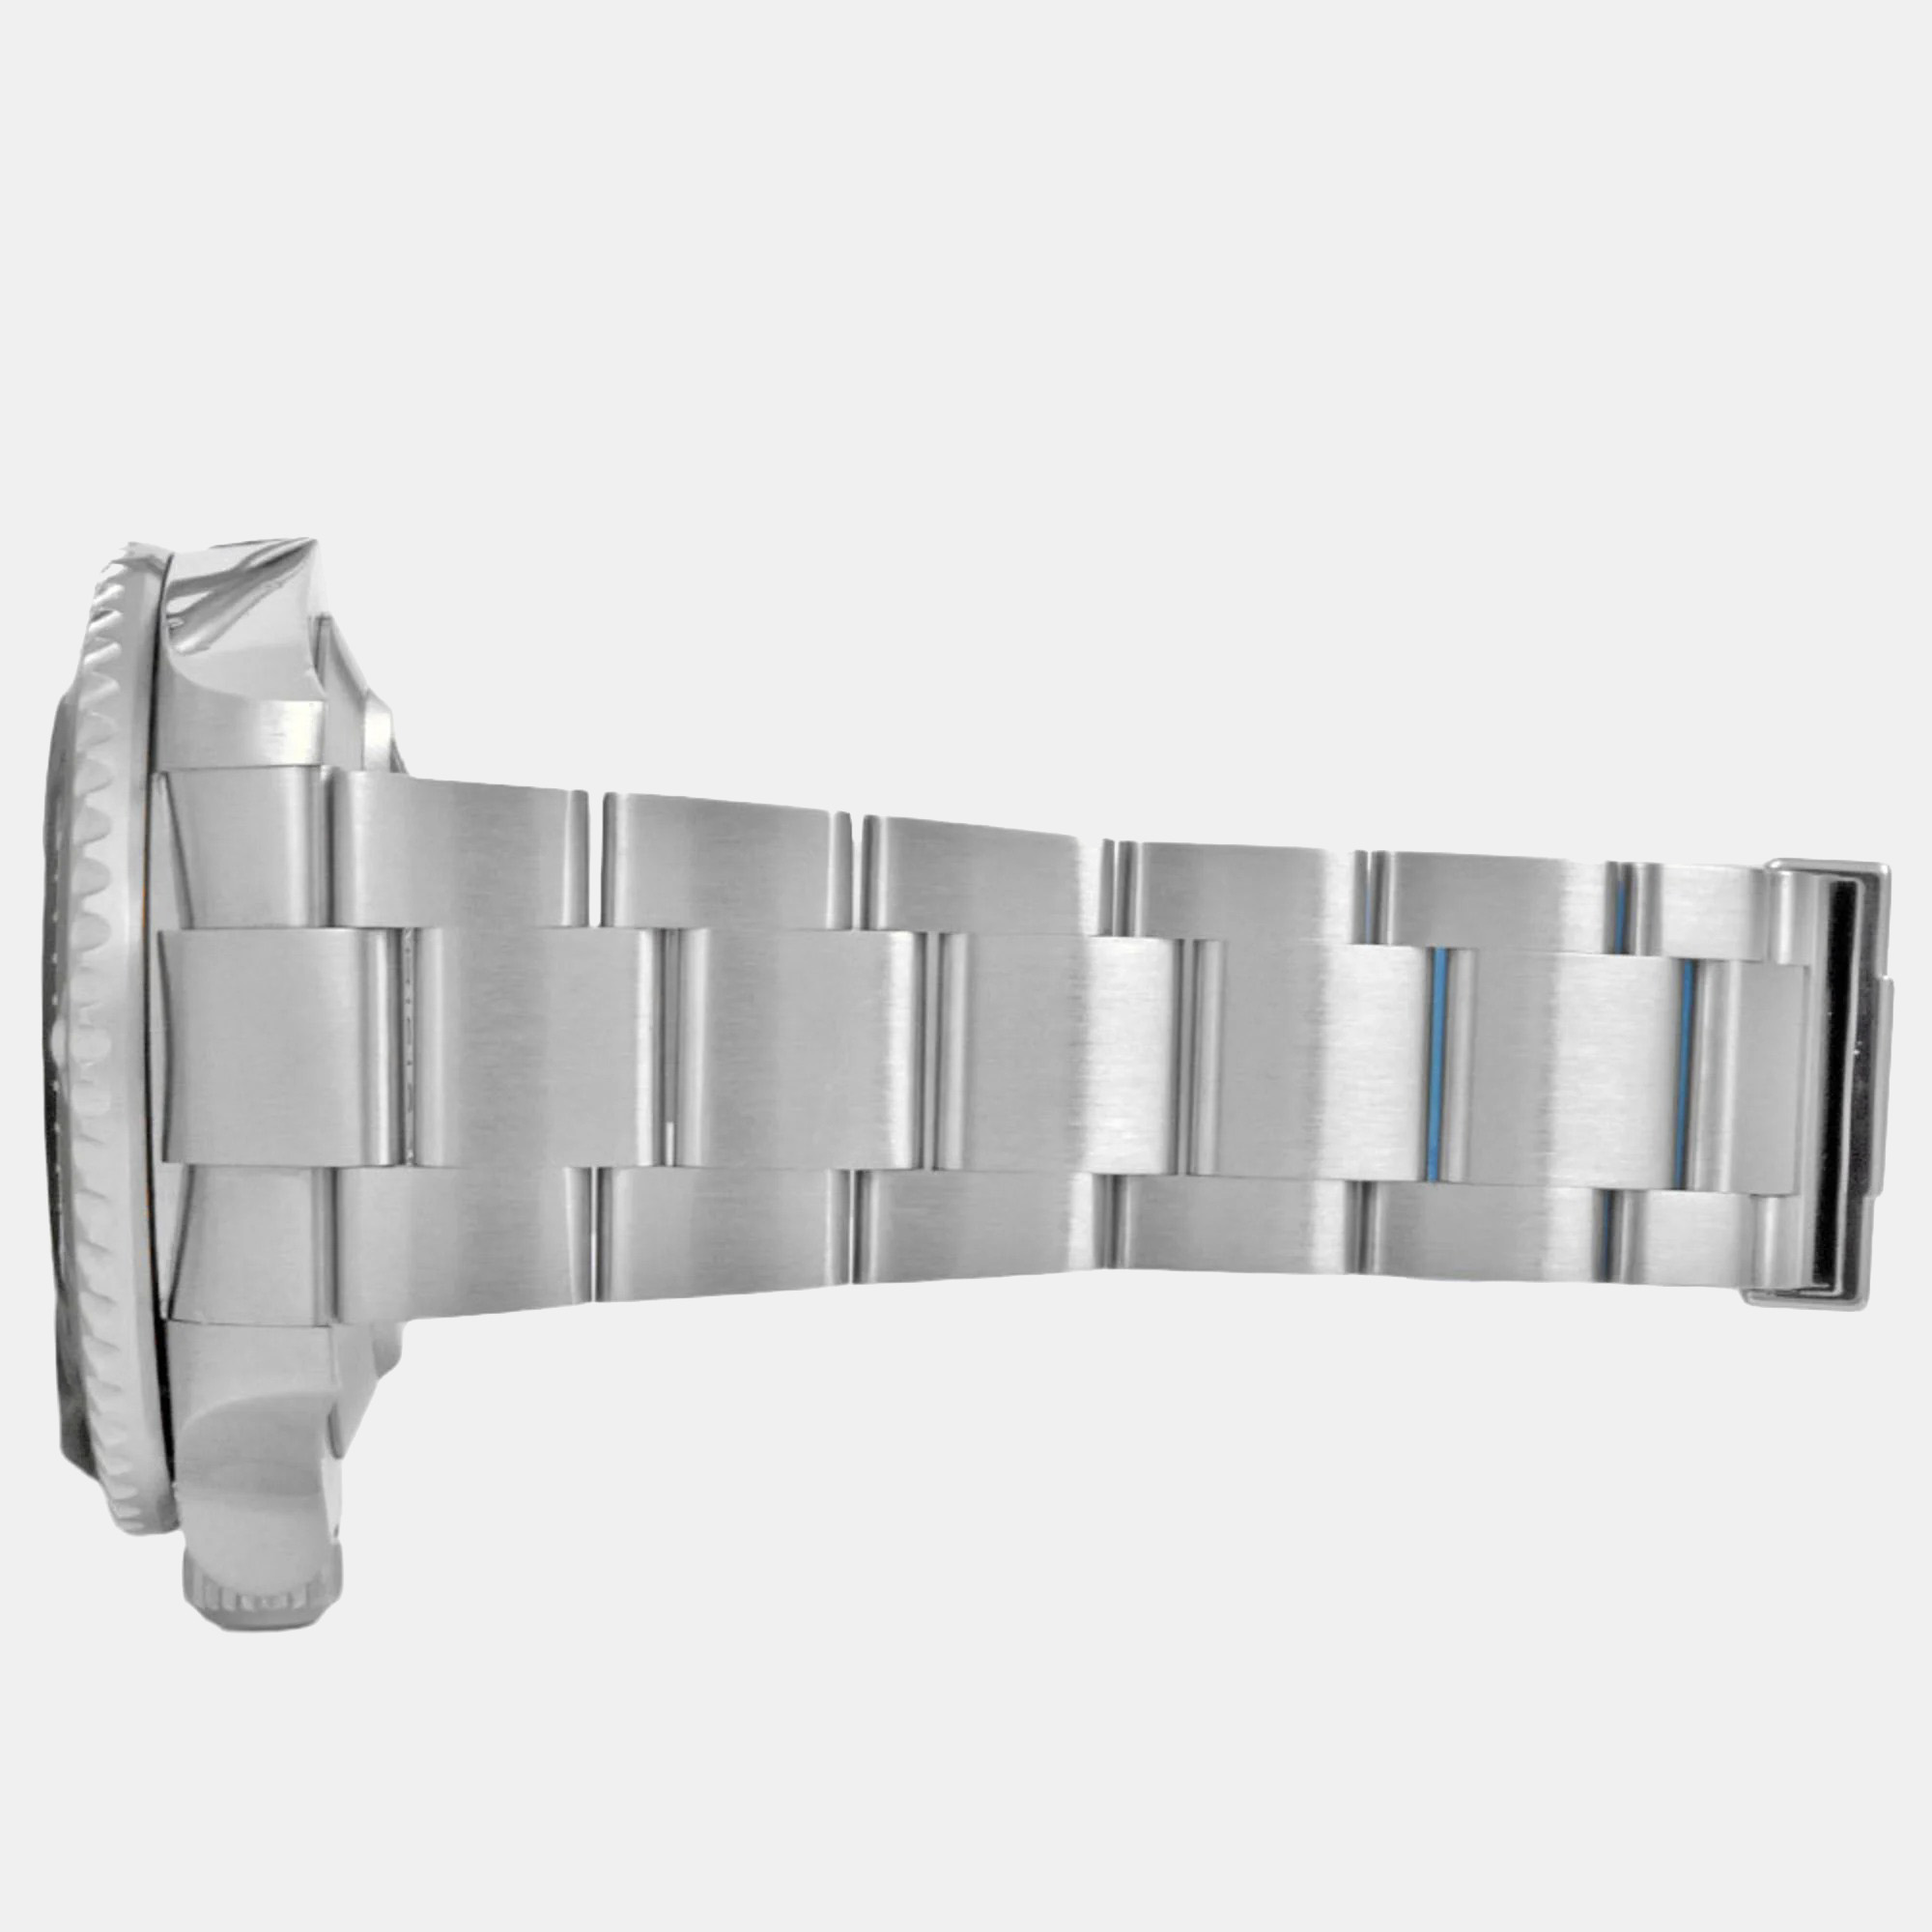 Rolex Black Stainless Steel Sea-Dweller 126600 Automatic Men's Wristwatch 43 Mm